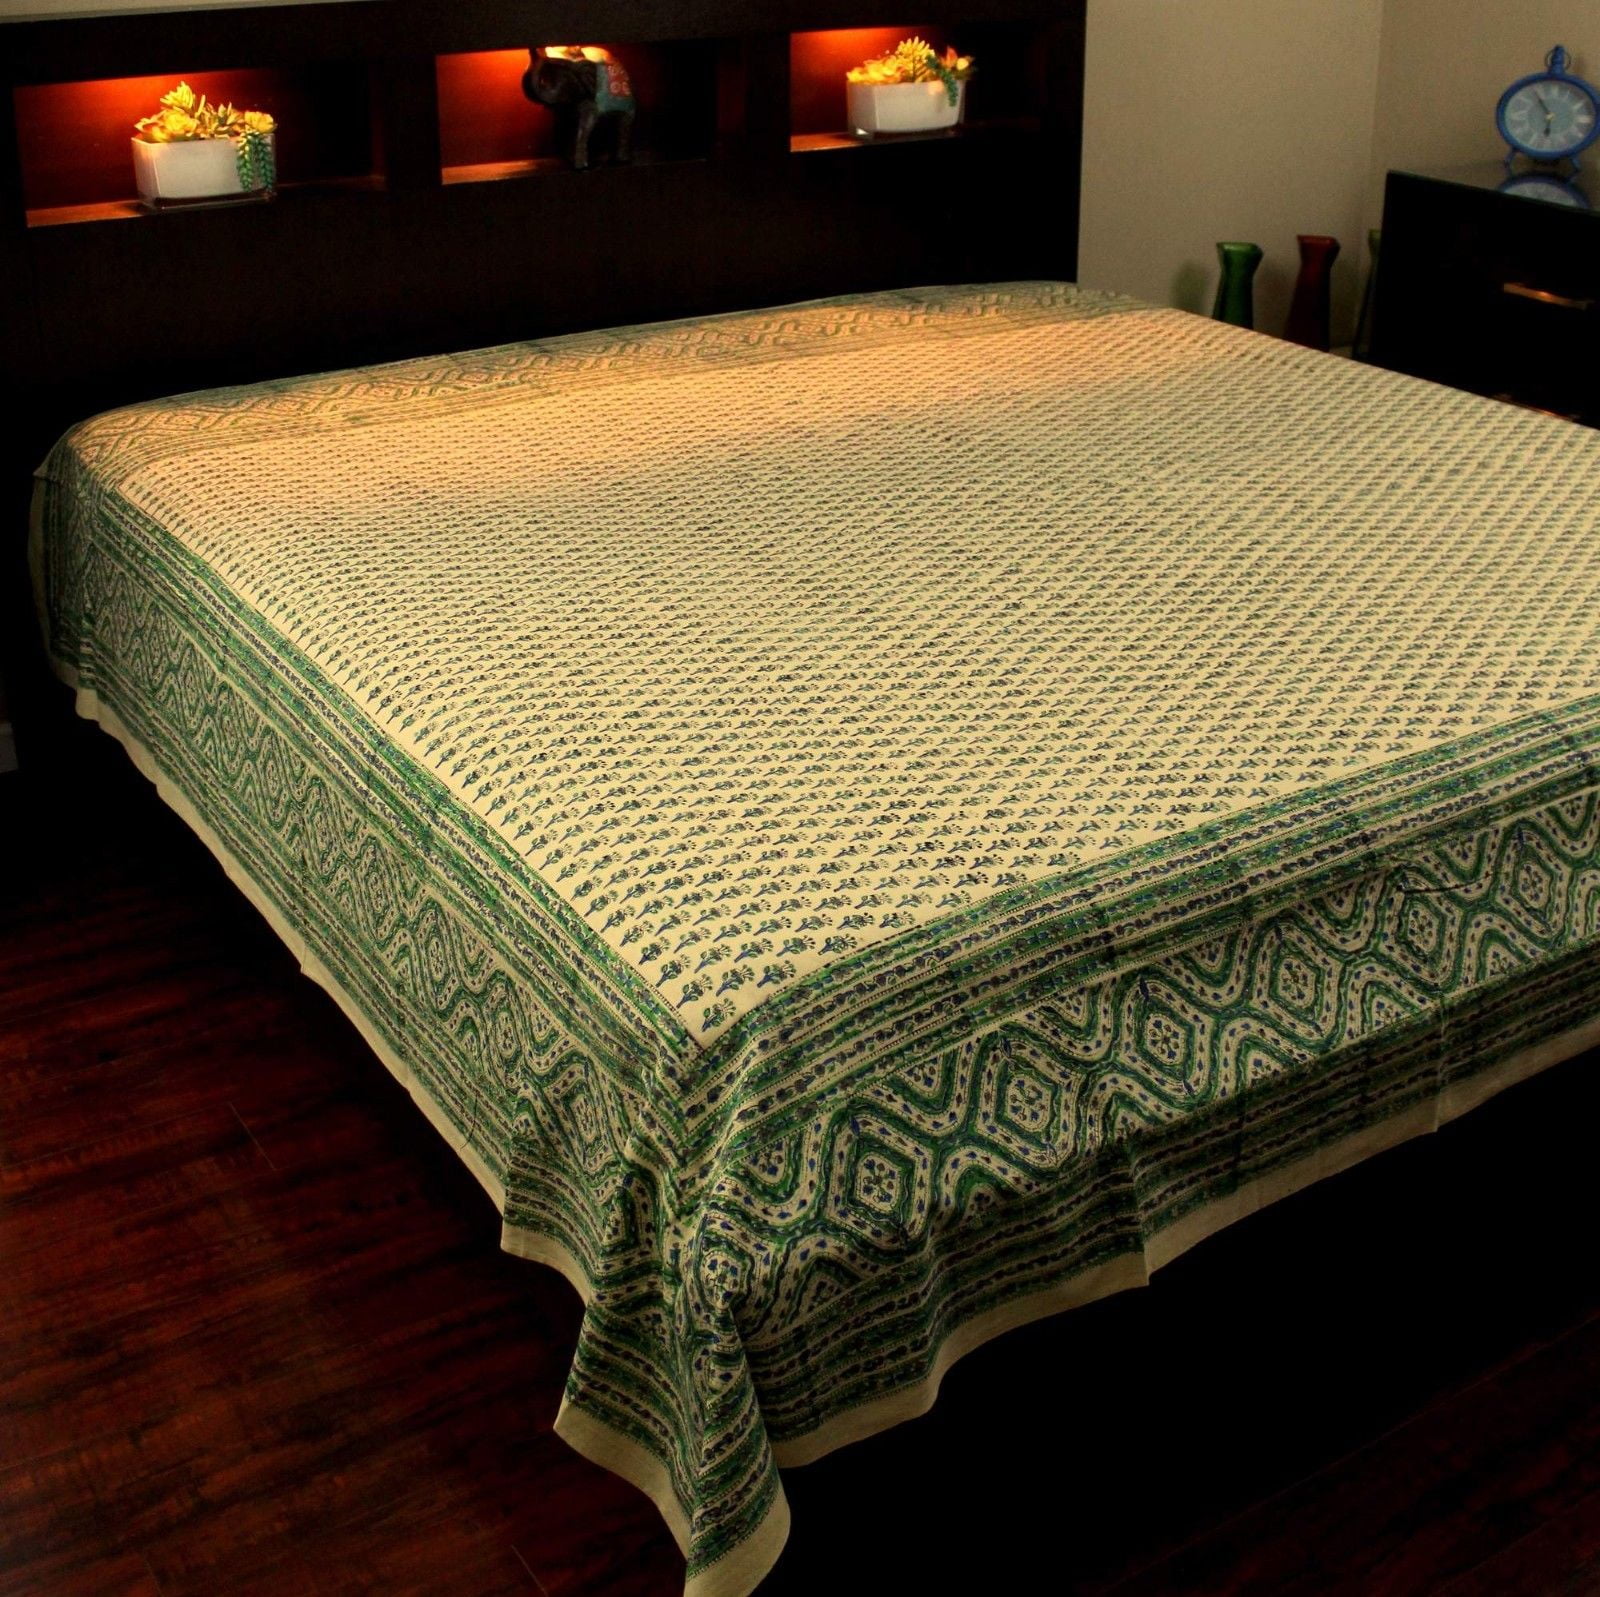 Details about   Cotton Fabric Handmade Floor Cushion Cover Art Green Color Mandala Flower Design